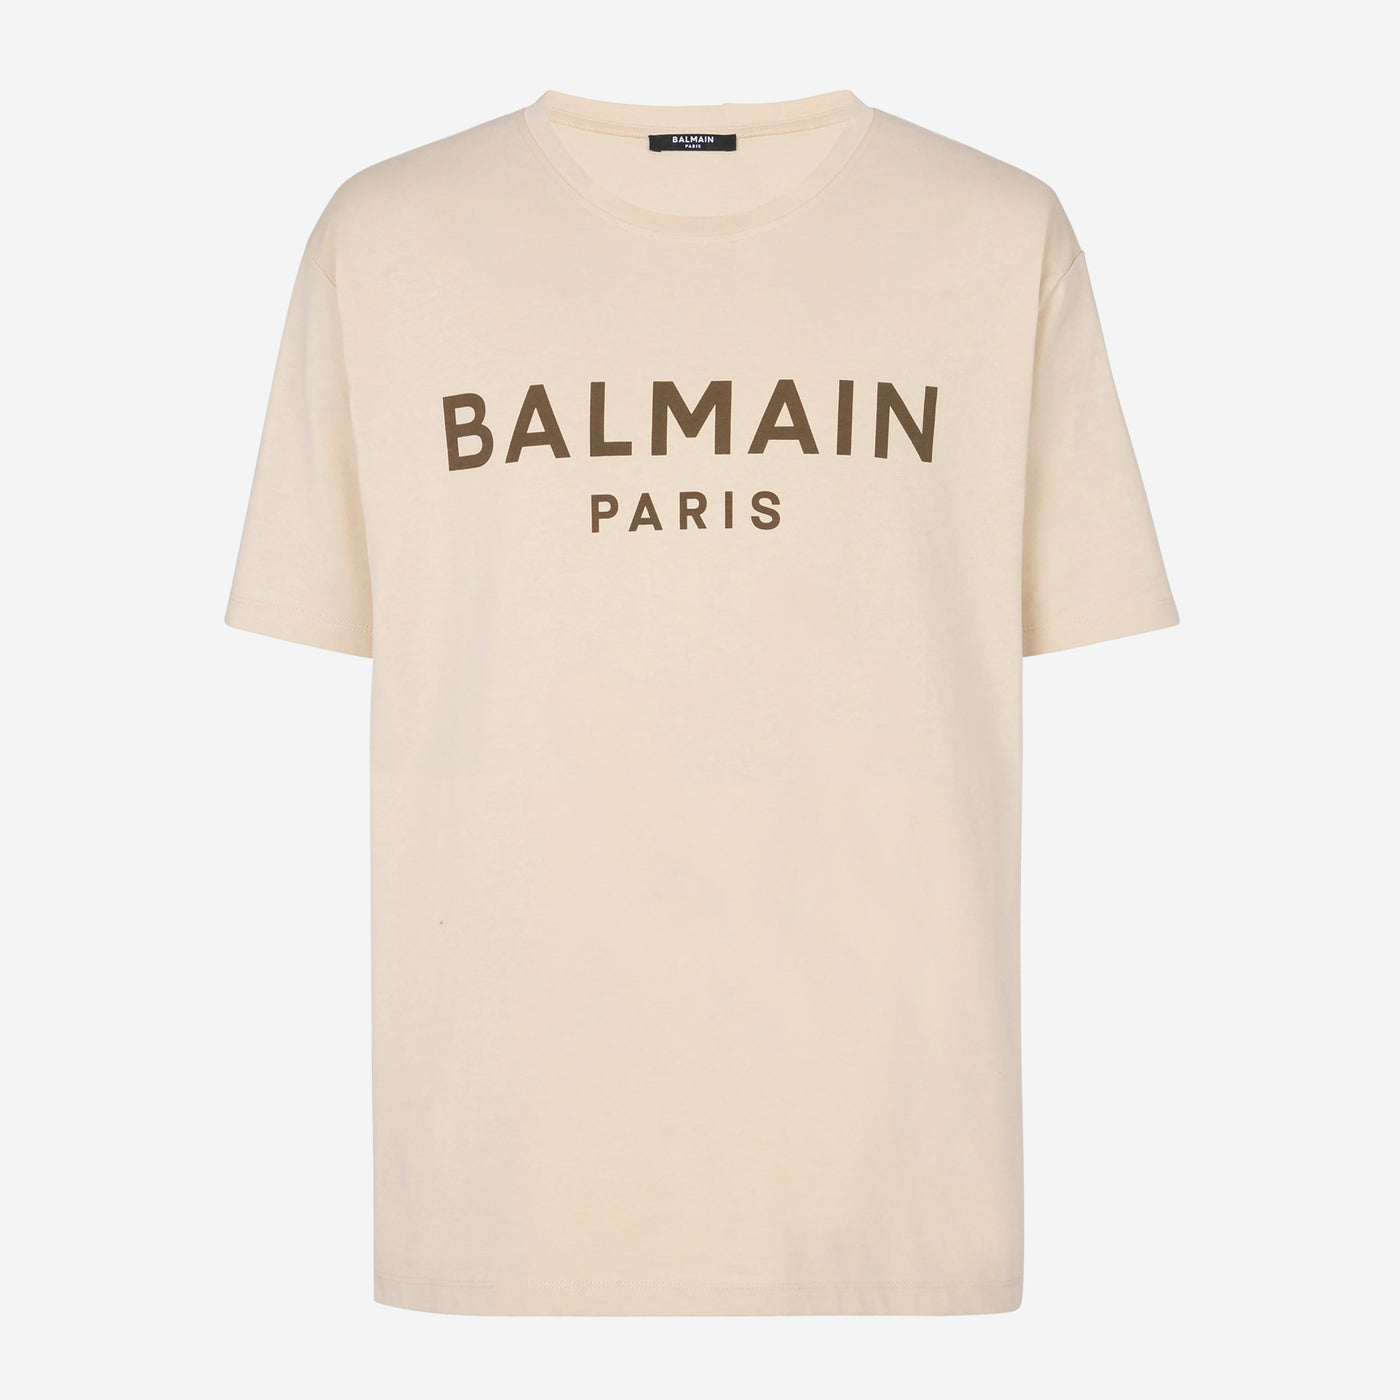 Balmain Paris Print T-Shirt